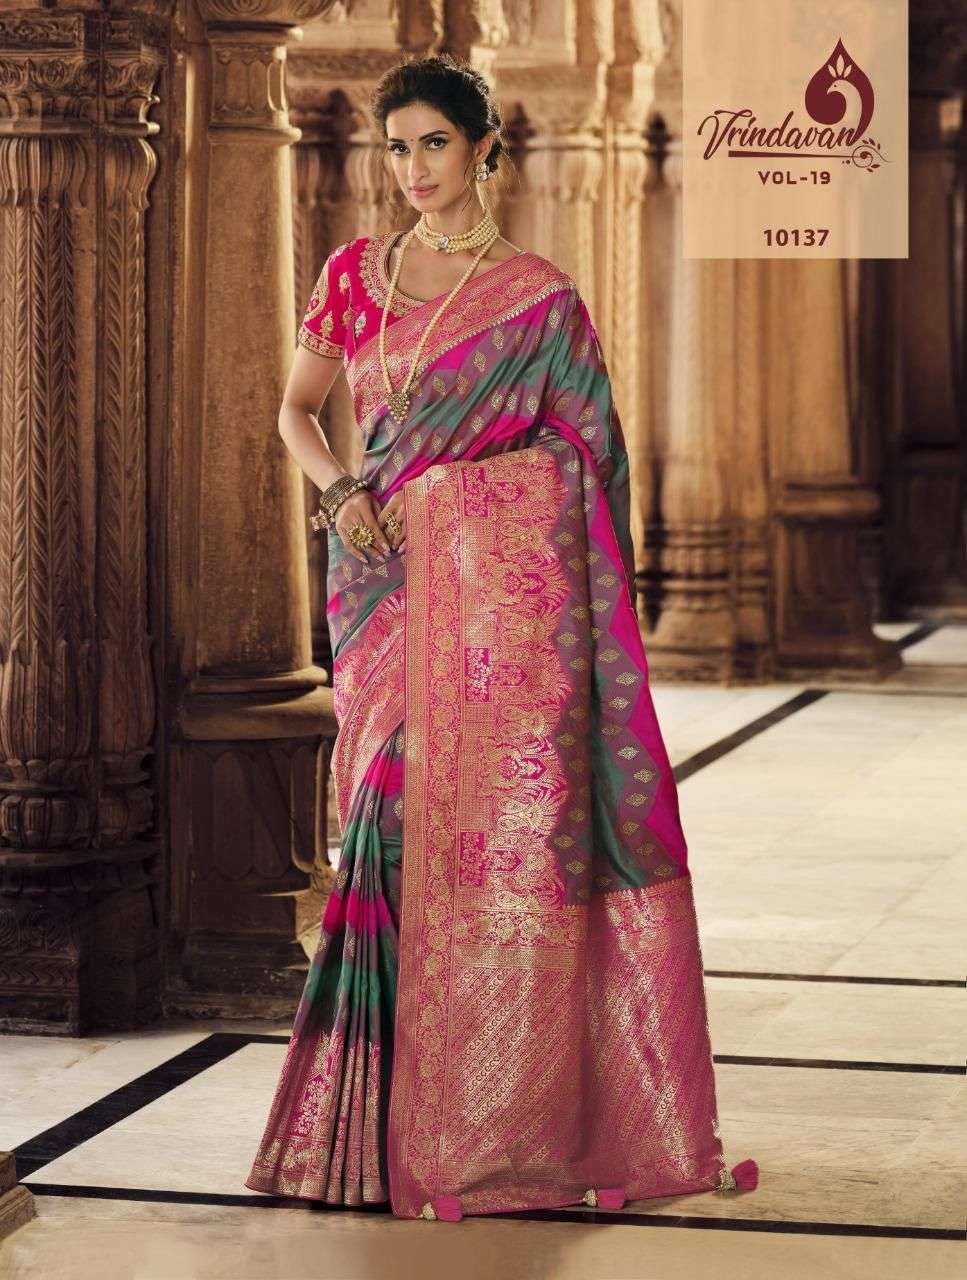 royal vrindavan vol 19 series 10127-10141 silk saree collection